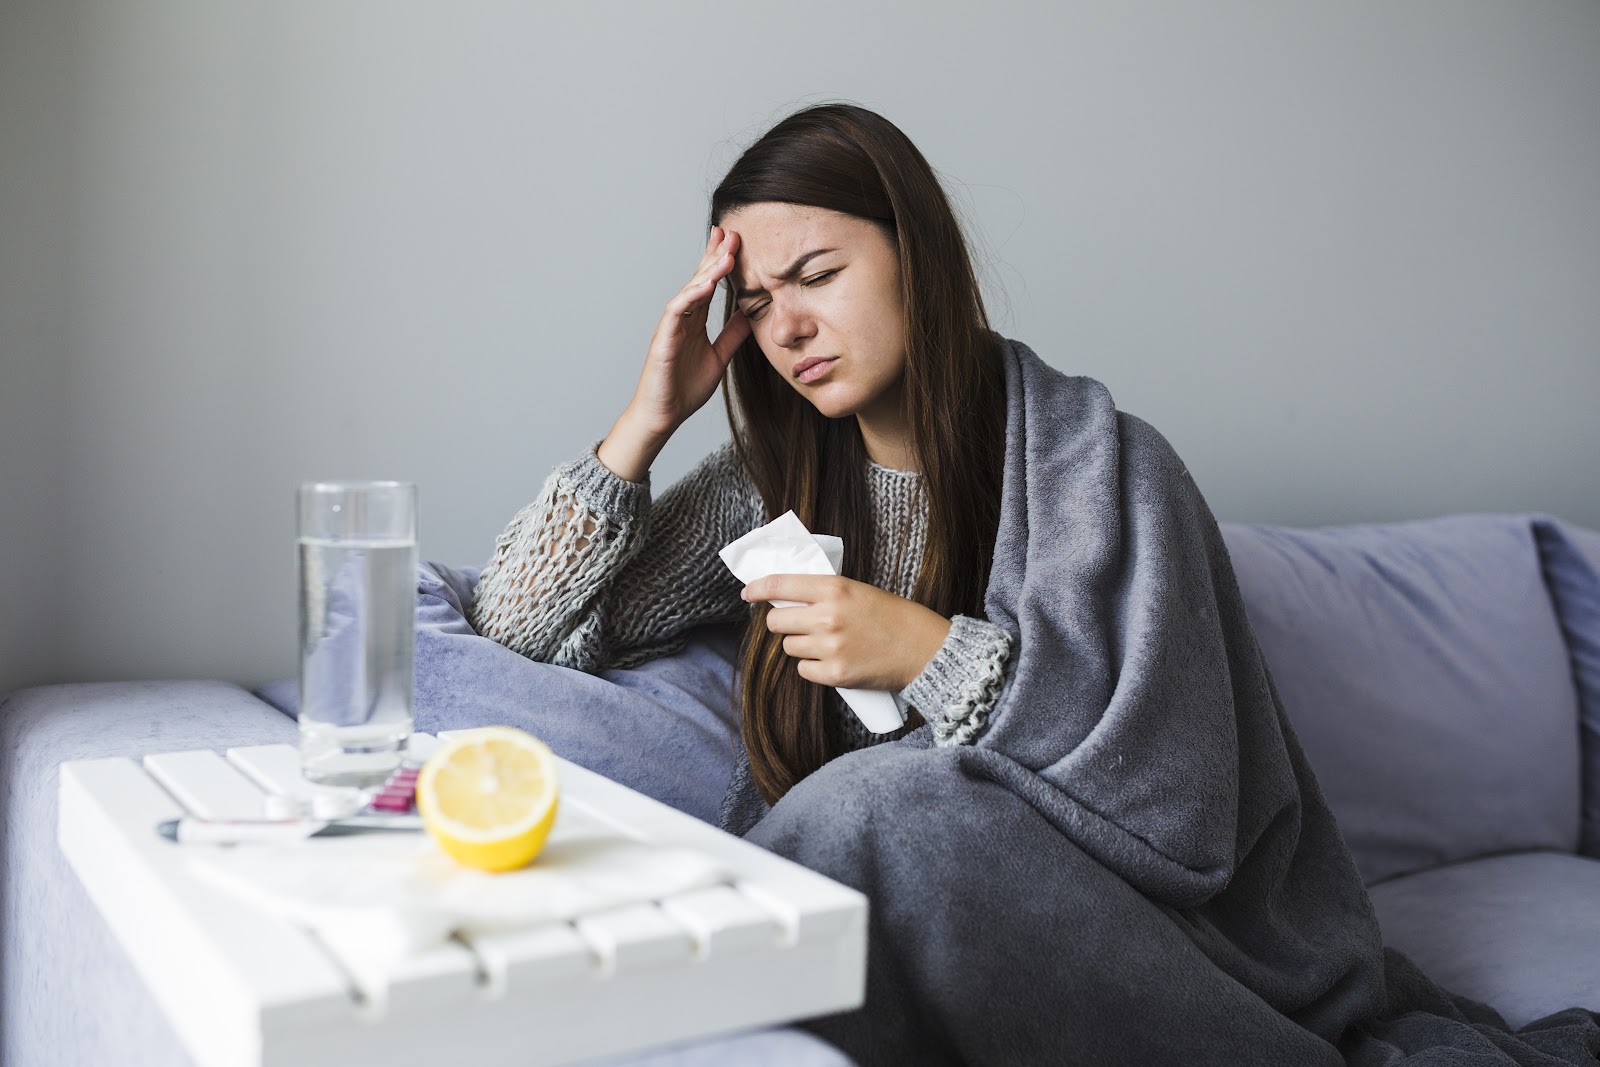 Ways to stay healthy this flu season